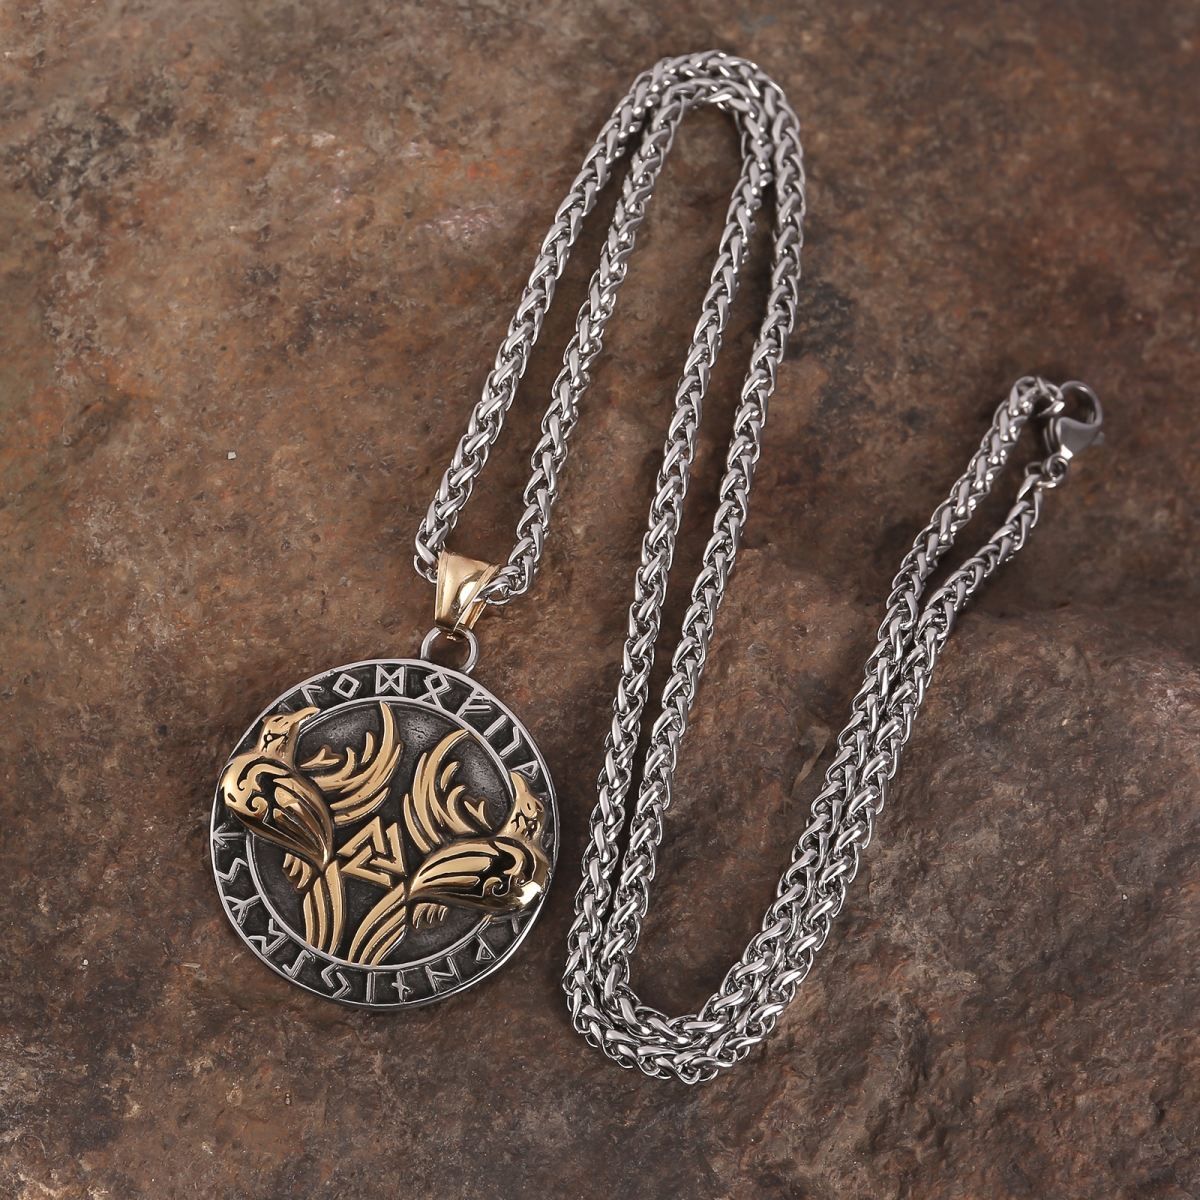 Viking necklace nordic mythology-NORSECOLLECTION- Viking Jewelry,Viking Necklace,Viking Bracelet,Viking Rings,Viking Mugs,Viking Accessories,Viking Crafts